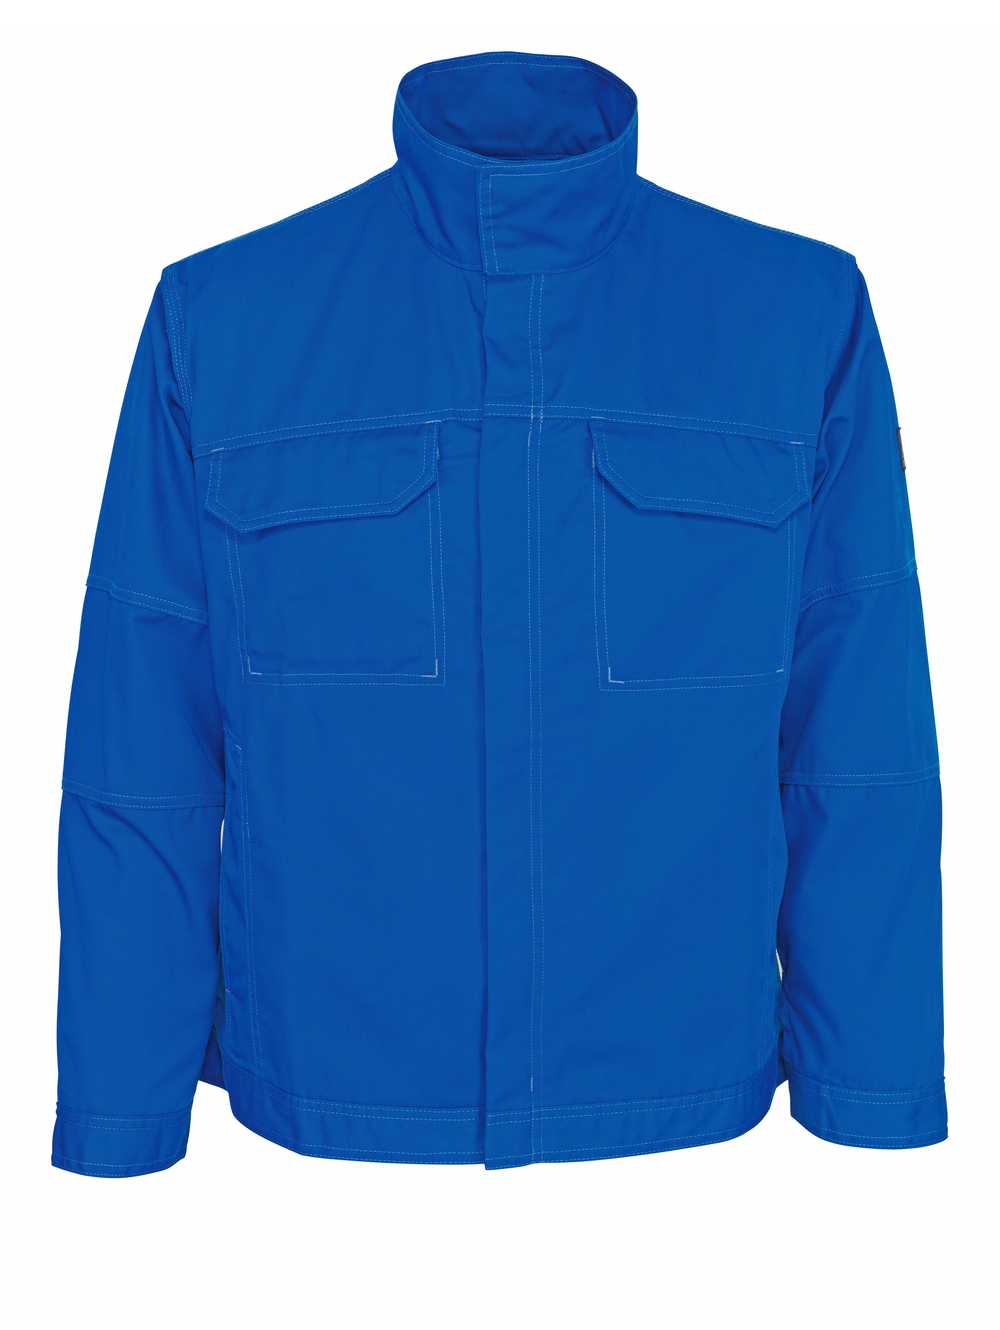 MASCOT-Workwear, Arbeits-Berufs-Arbeits-Jacke, Trenton, 355 g/m², kornblau